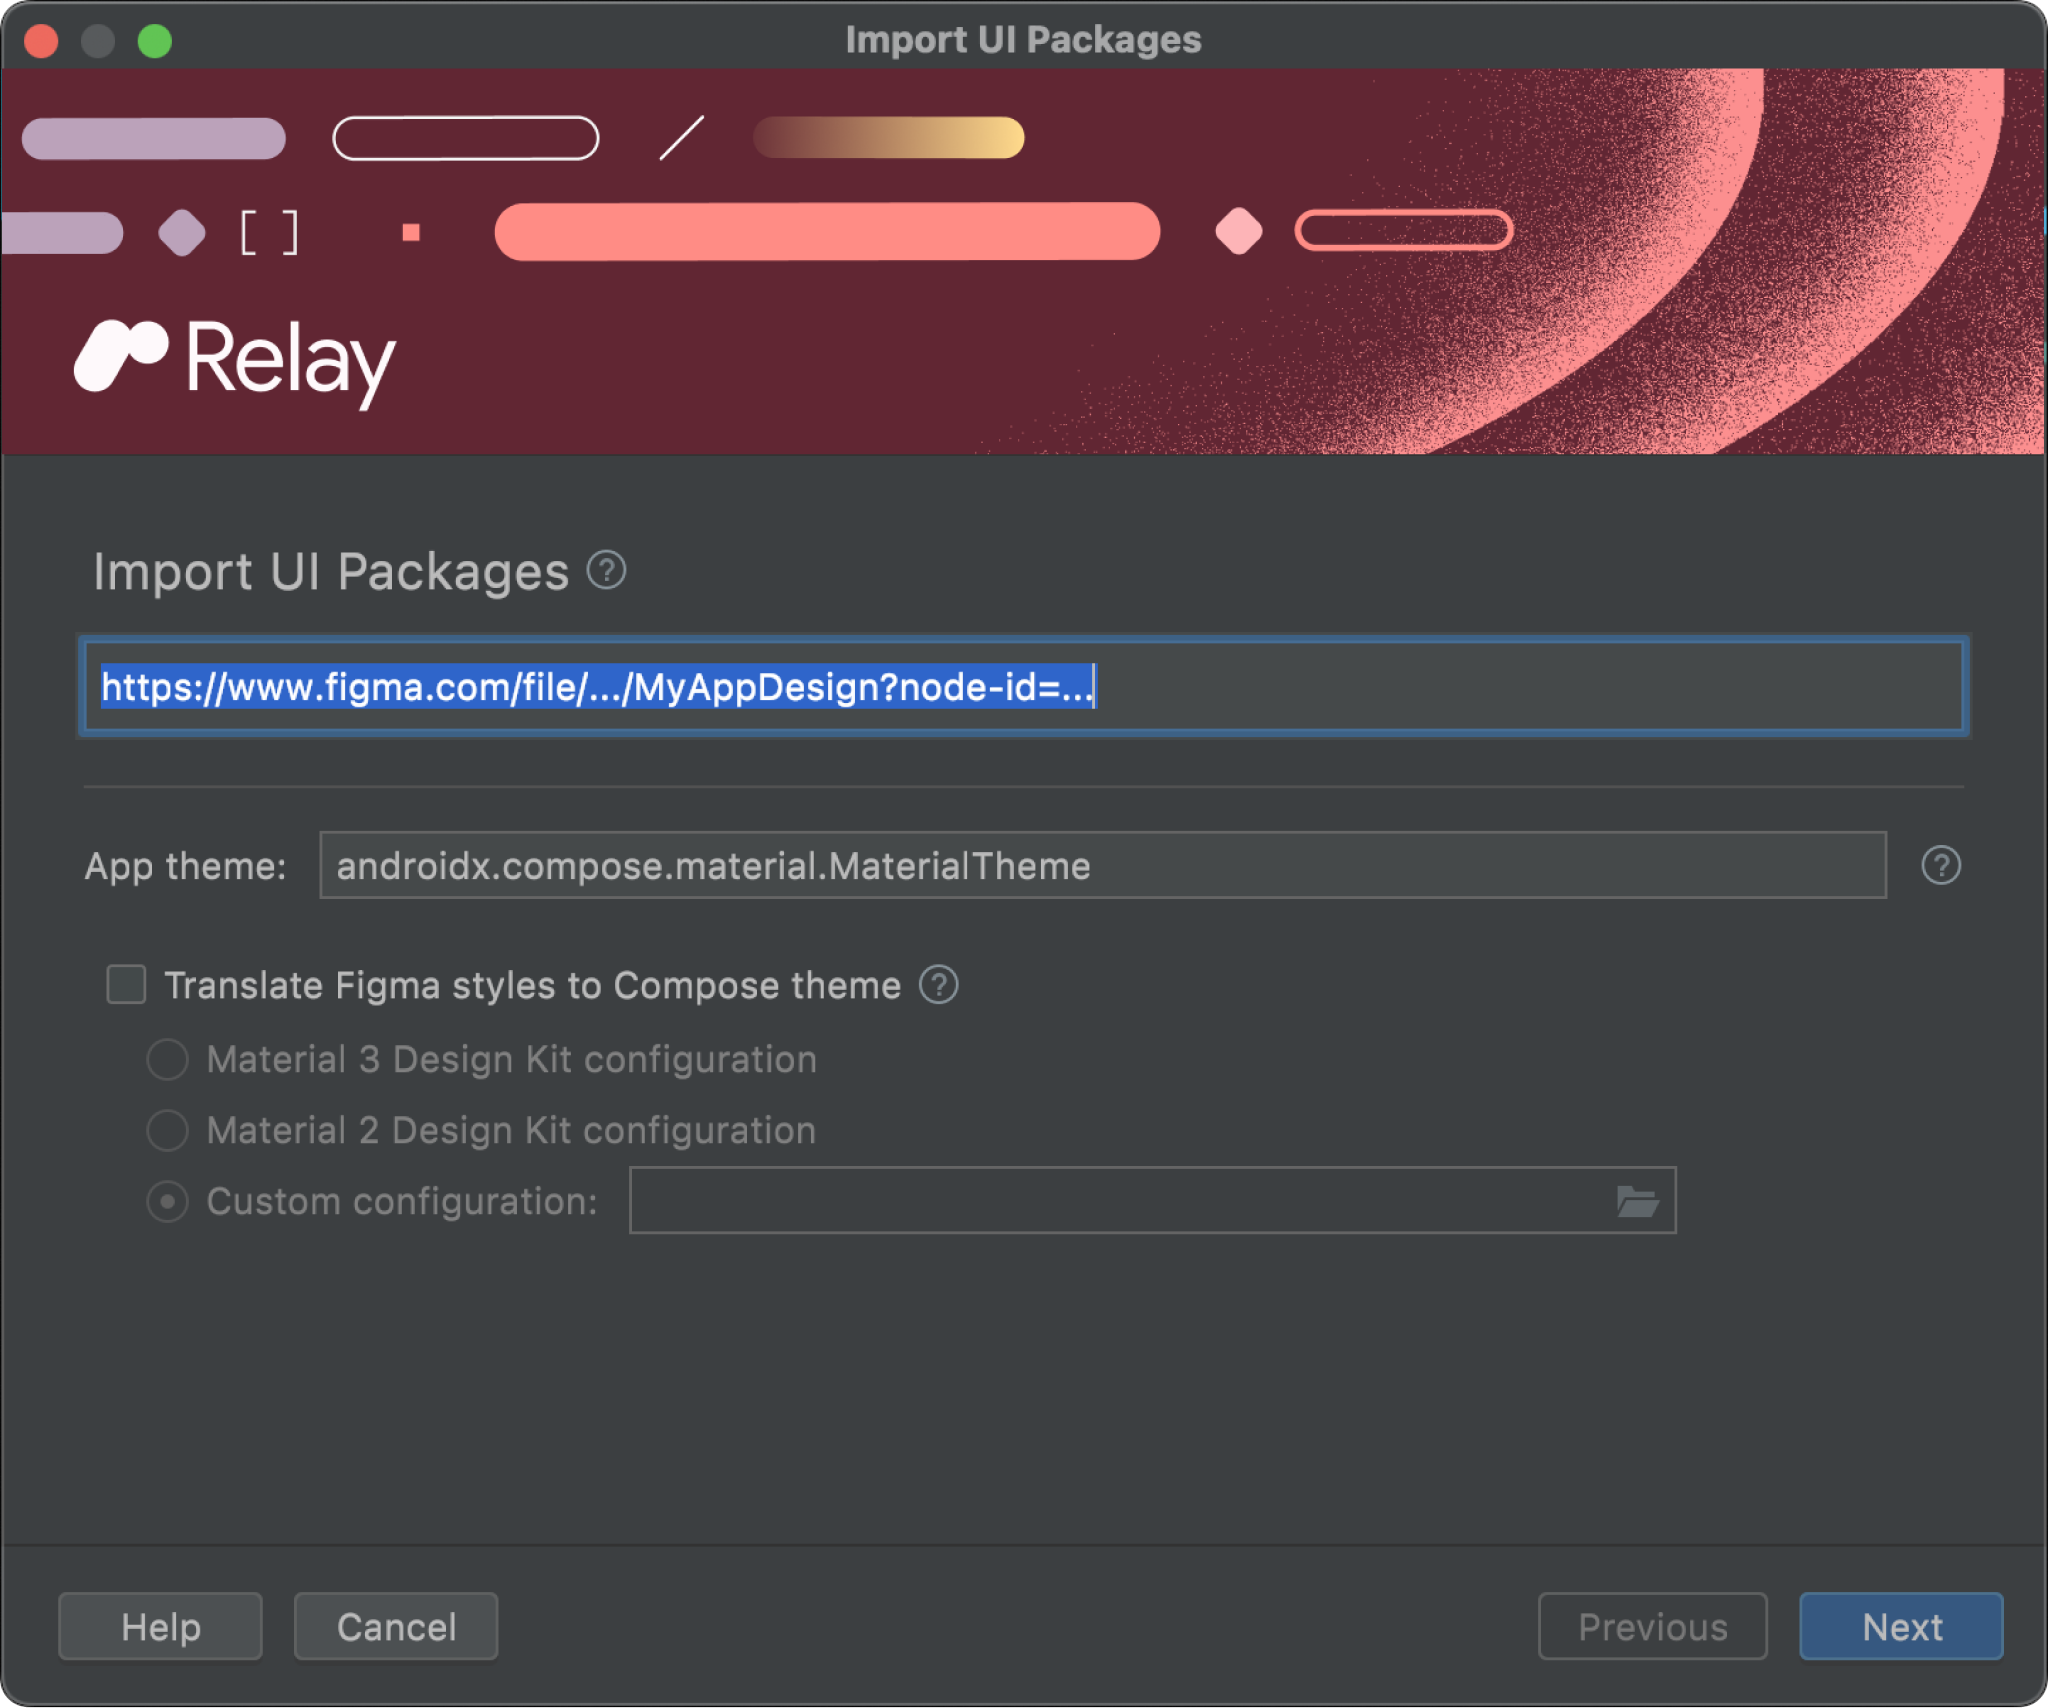 Complemento Relay for Android Studio: Cuadro de diálogo de importación de paquetes de IU